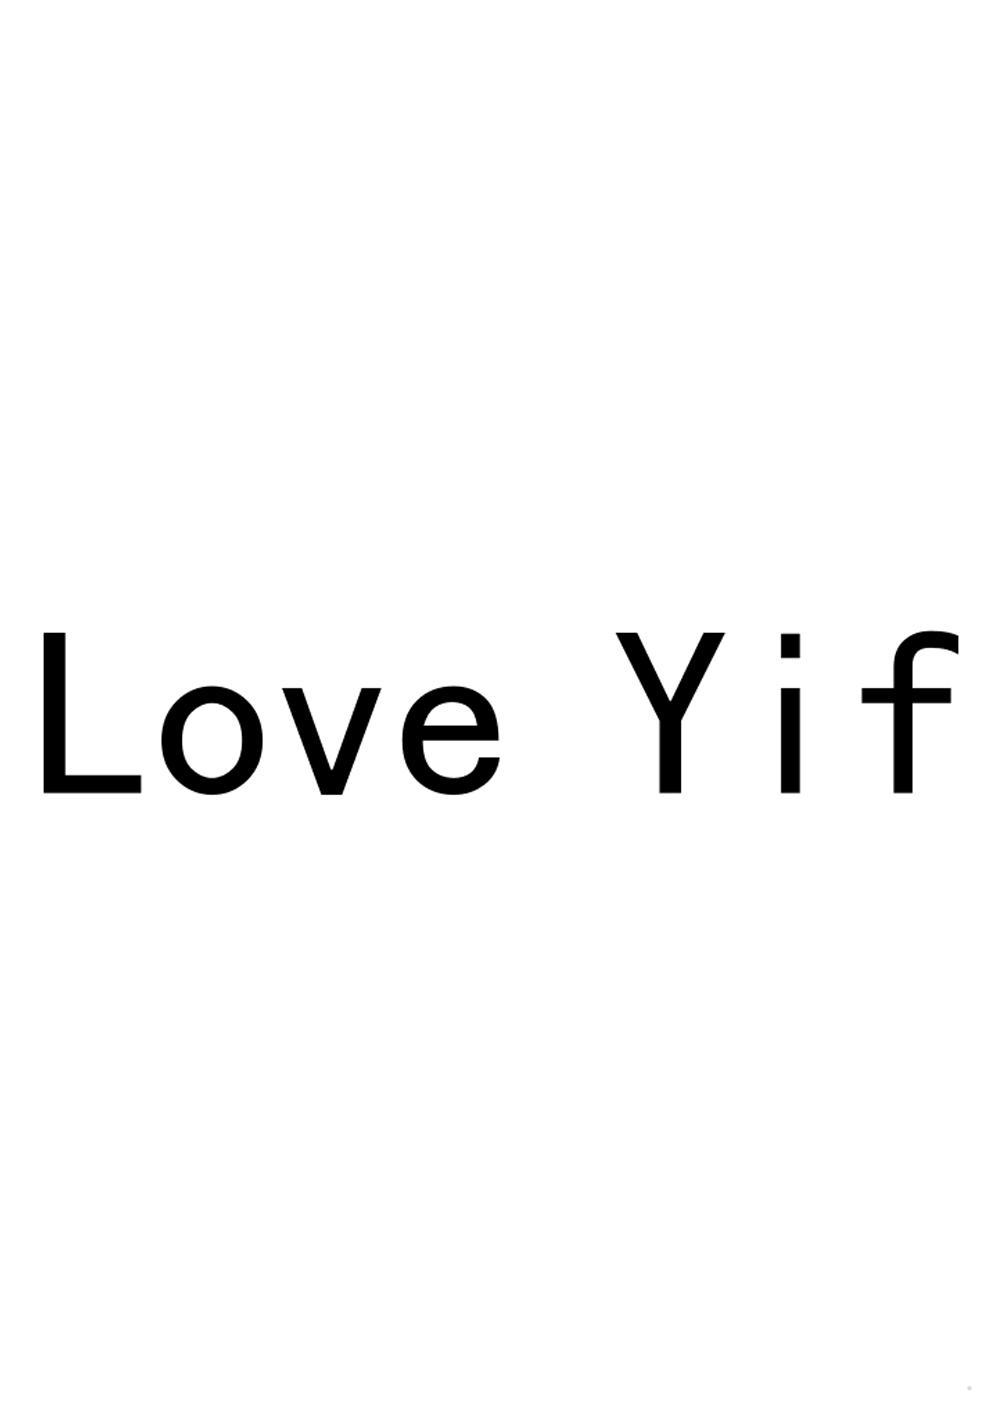 LOVE YIFlogo